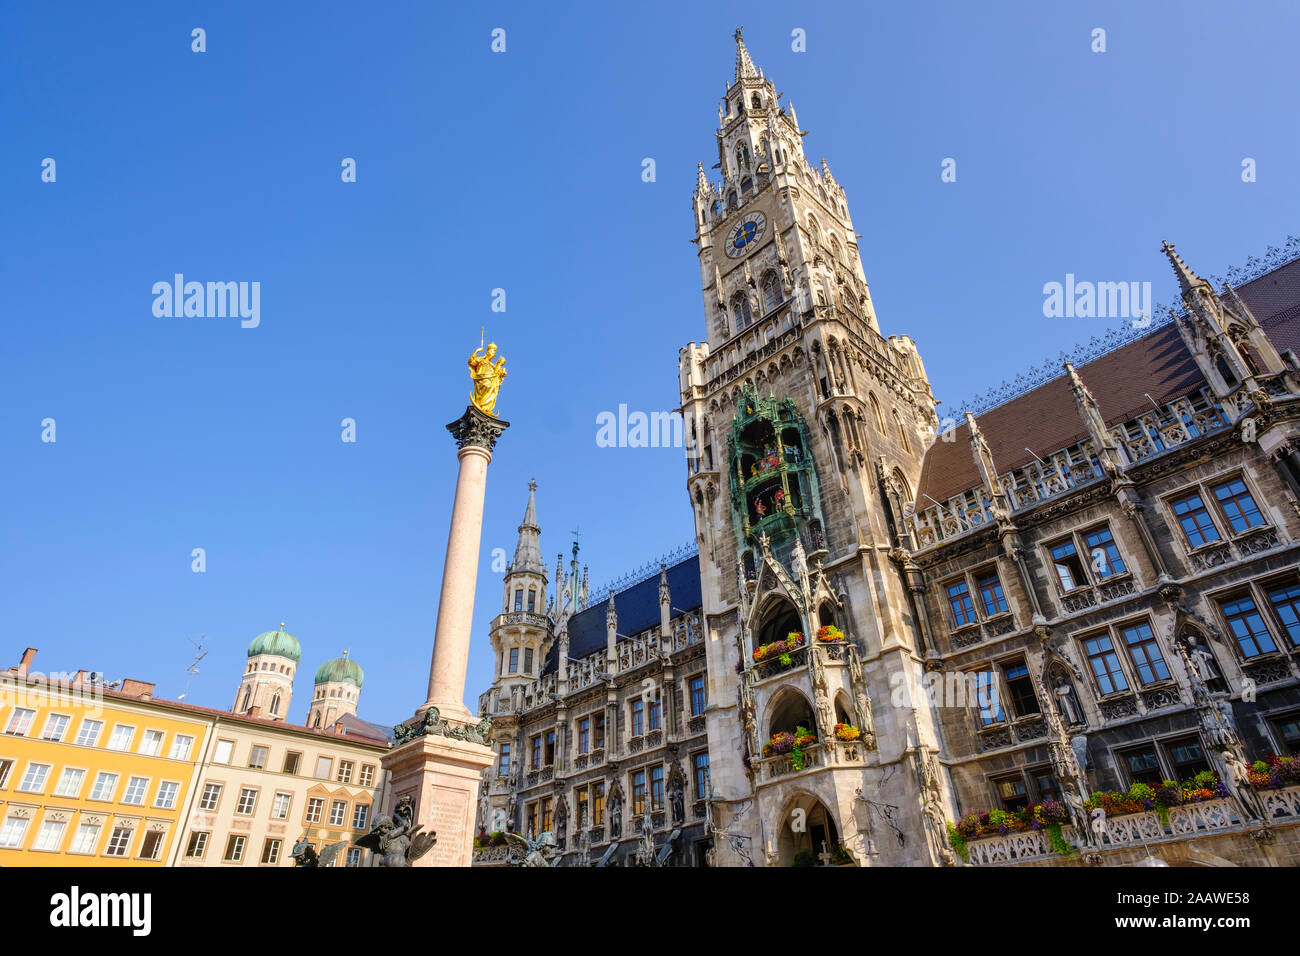 Germany, Bavaria, Upper Bavaria, Munich, New Town Hall, domes of Frauenkirche and Mariensaule column on Marienplatz Stock Photo